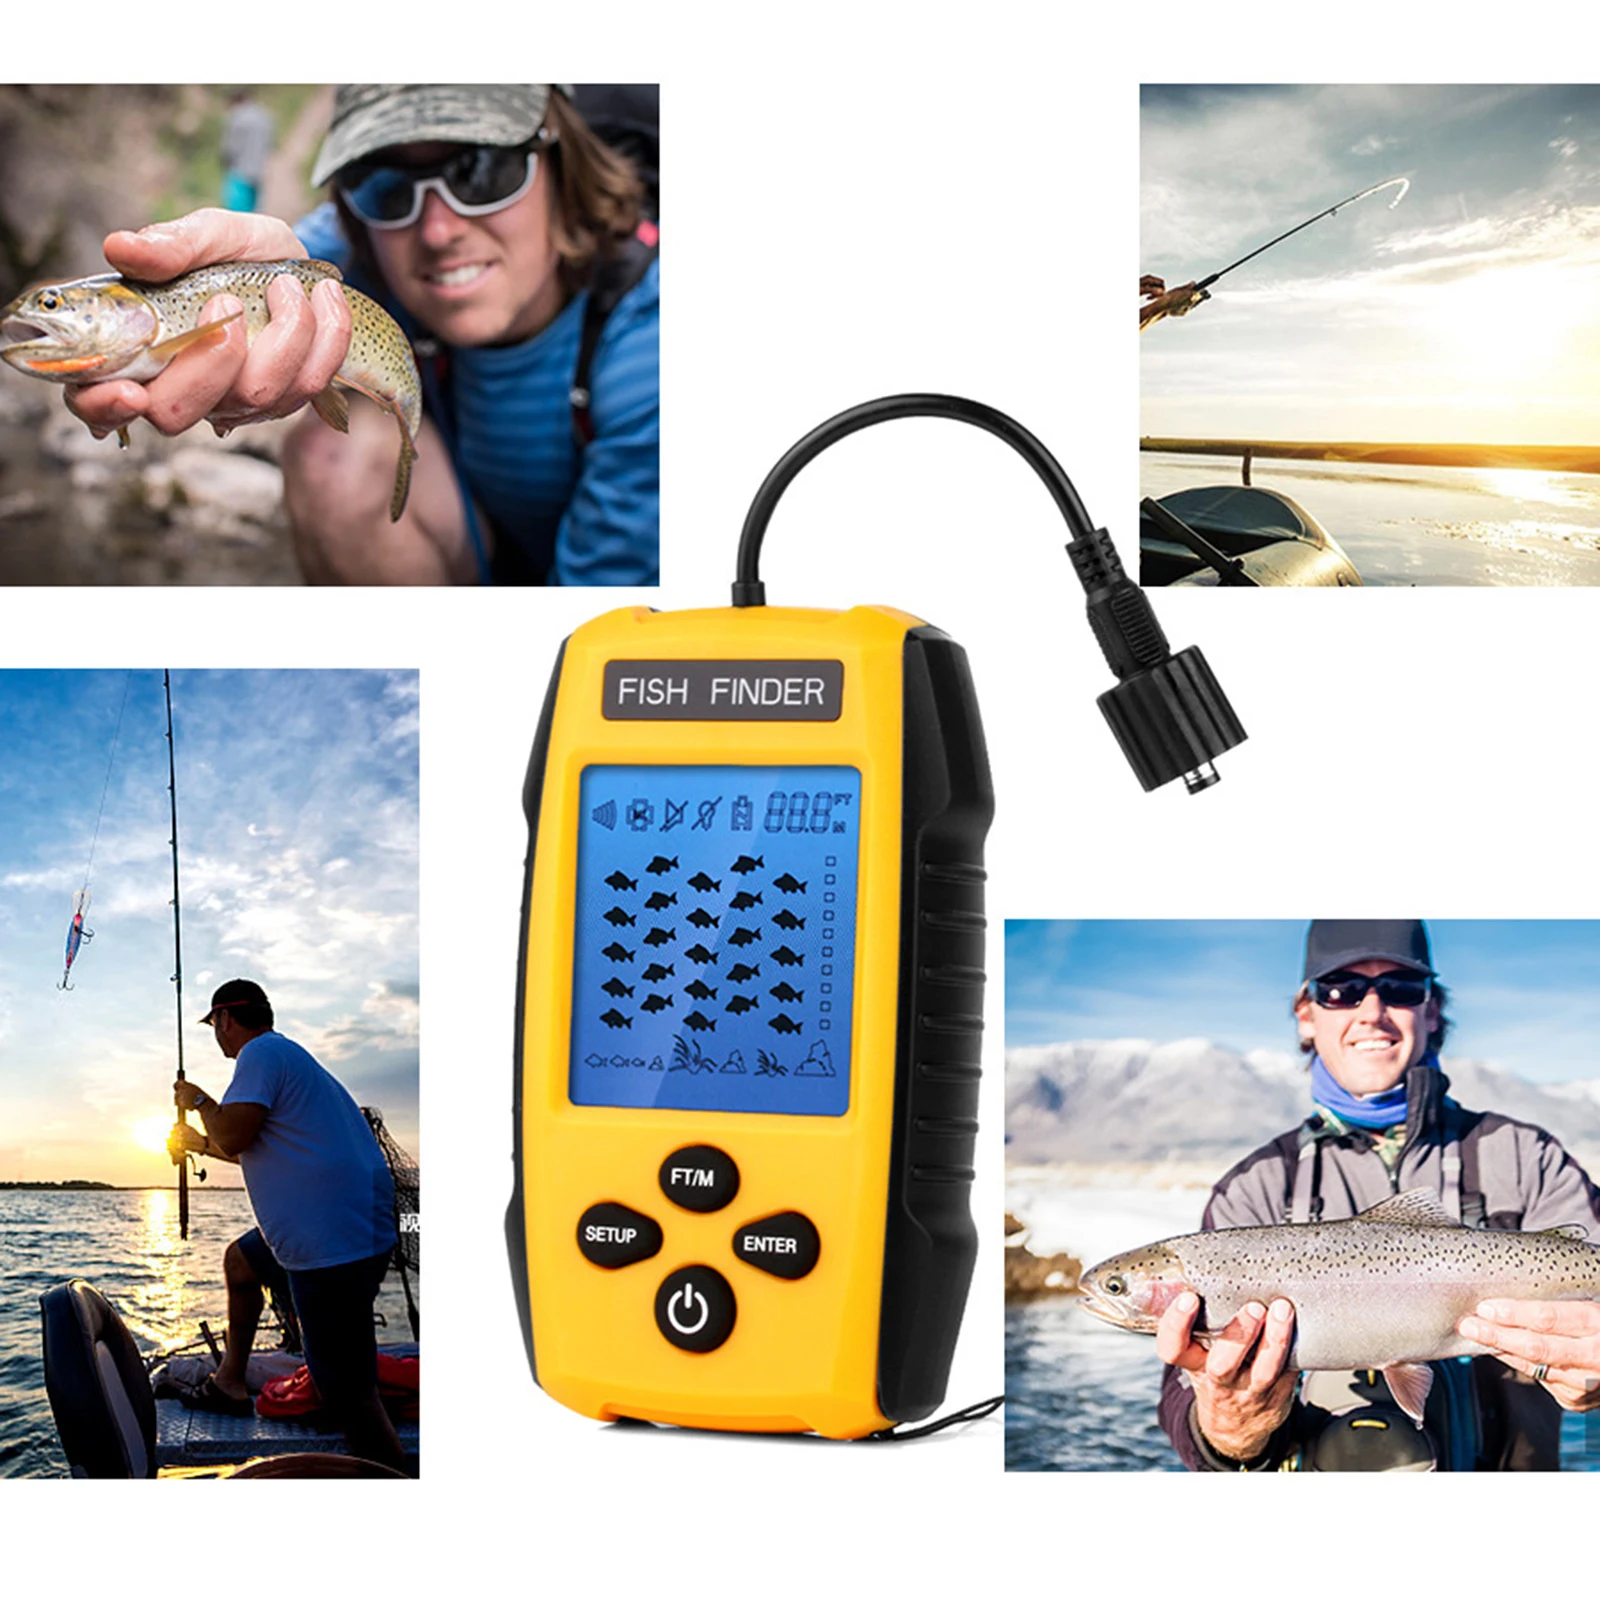 Handheld Fish Finder Ice Fishing Gear Depth Finder LCD Display 328ft (100m)